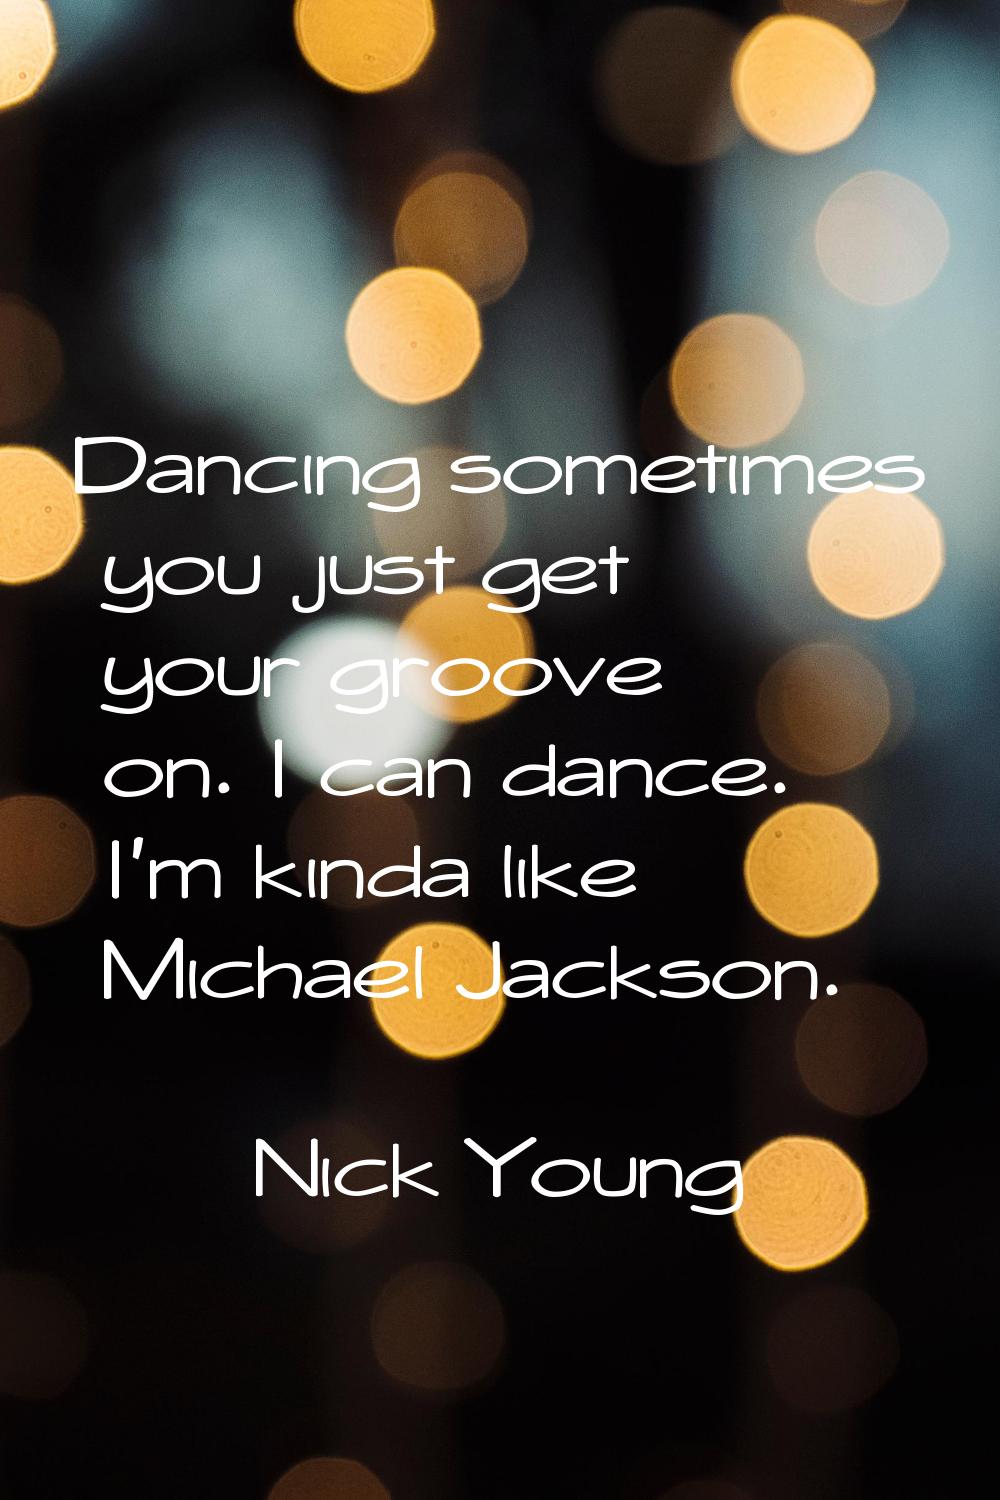 Dancing sometimes you just get your groove on. I can dance. I'm kinda like Michael Jackson.